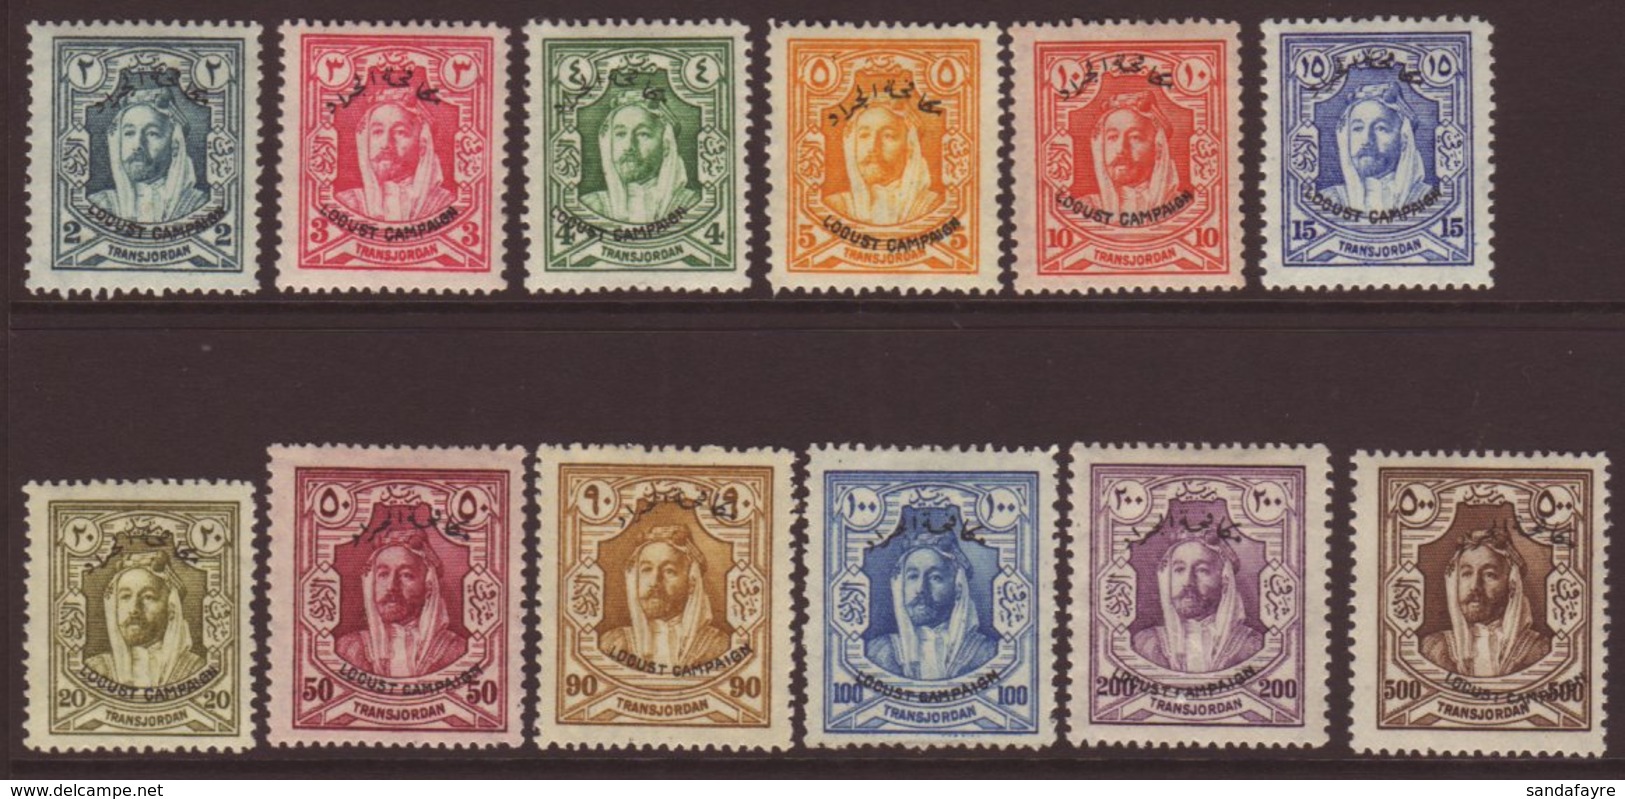 1930 Locust Campaign Overprints Complete Set, SG 183/94, Very Fine Mint, Fresh. (12 Stamps) For More Images, Please Visi - Jordanië